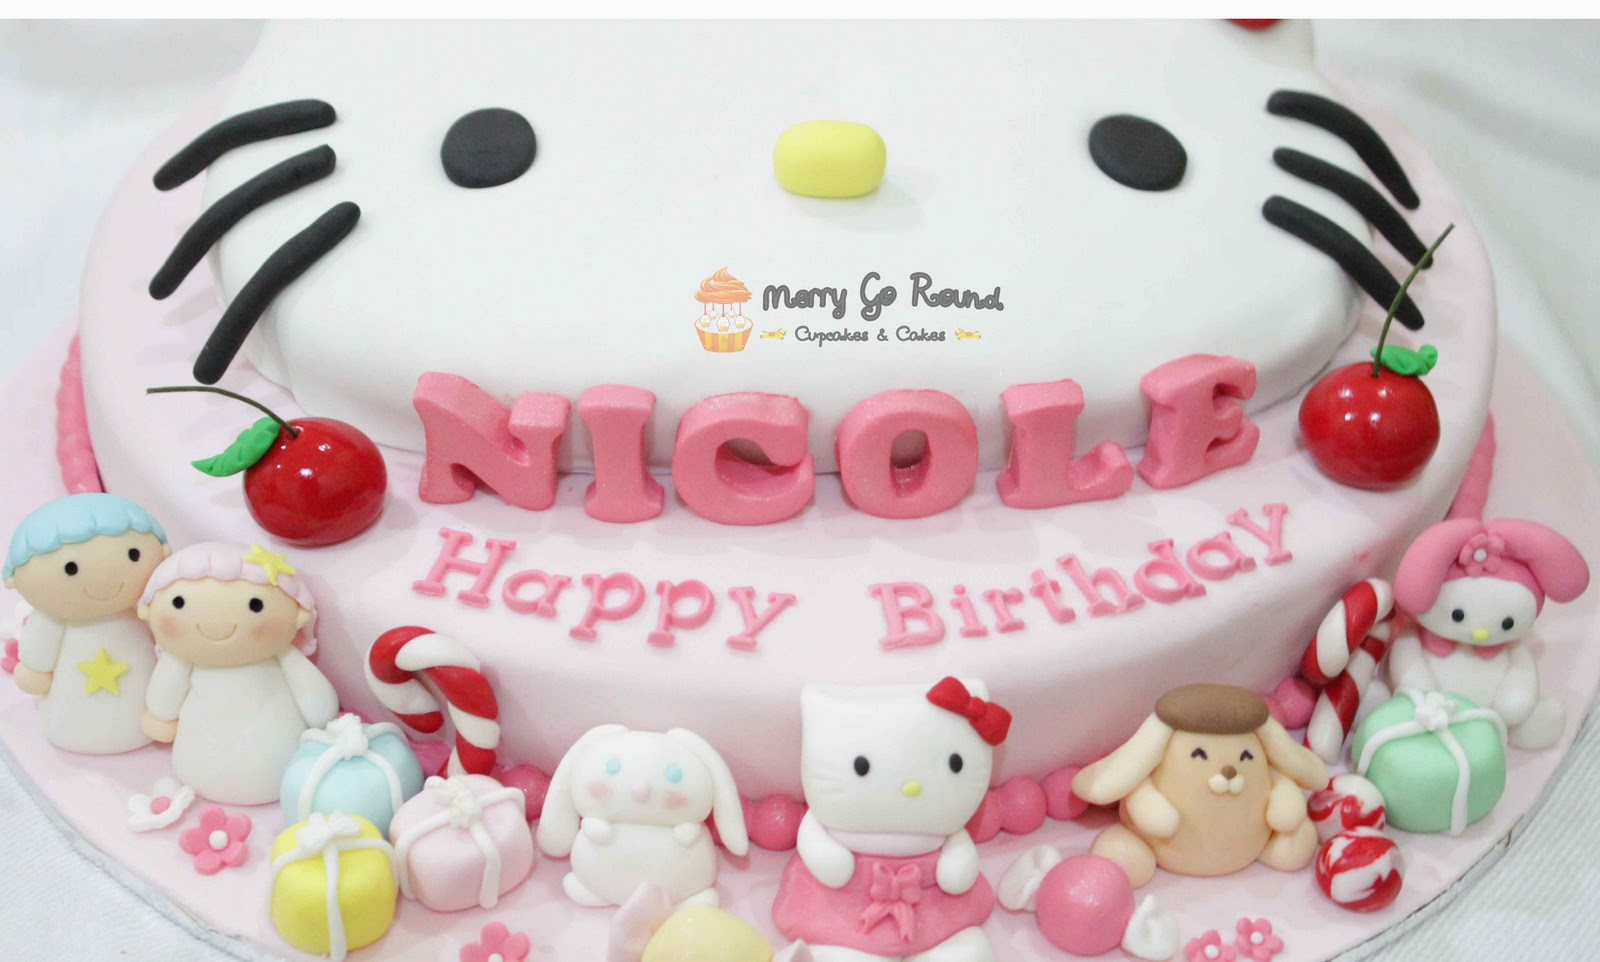 Happy Birthday Nicole Funny
 Merry Go Round Cupcakes & Cakes Sweet Hello Kitty and